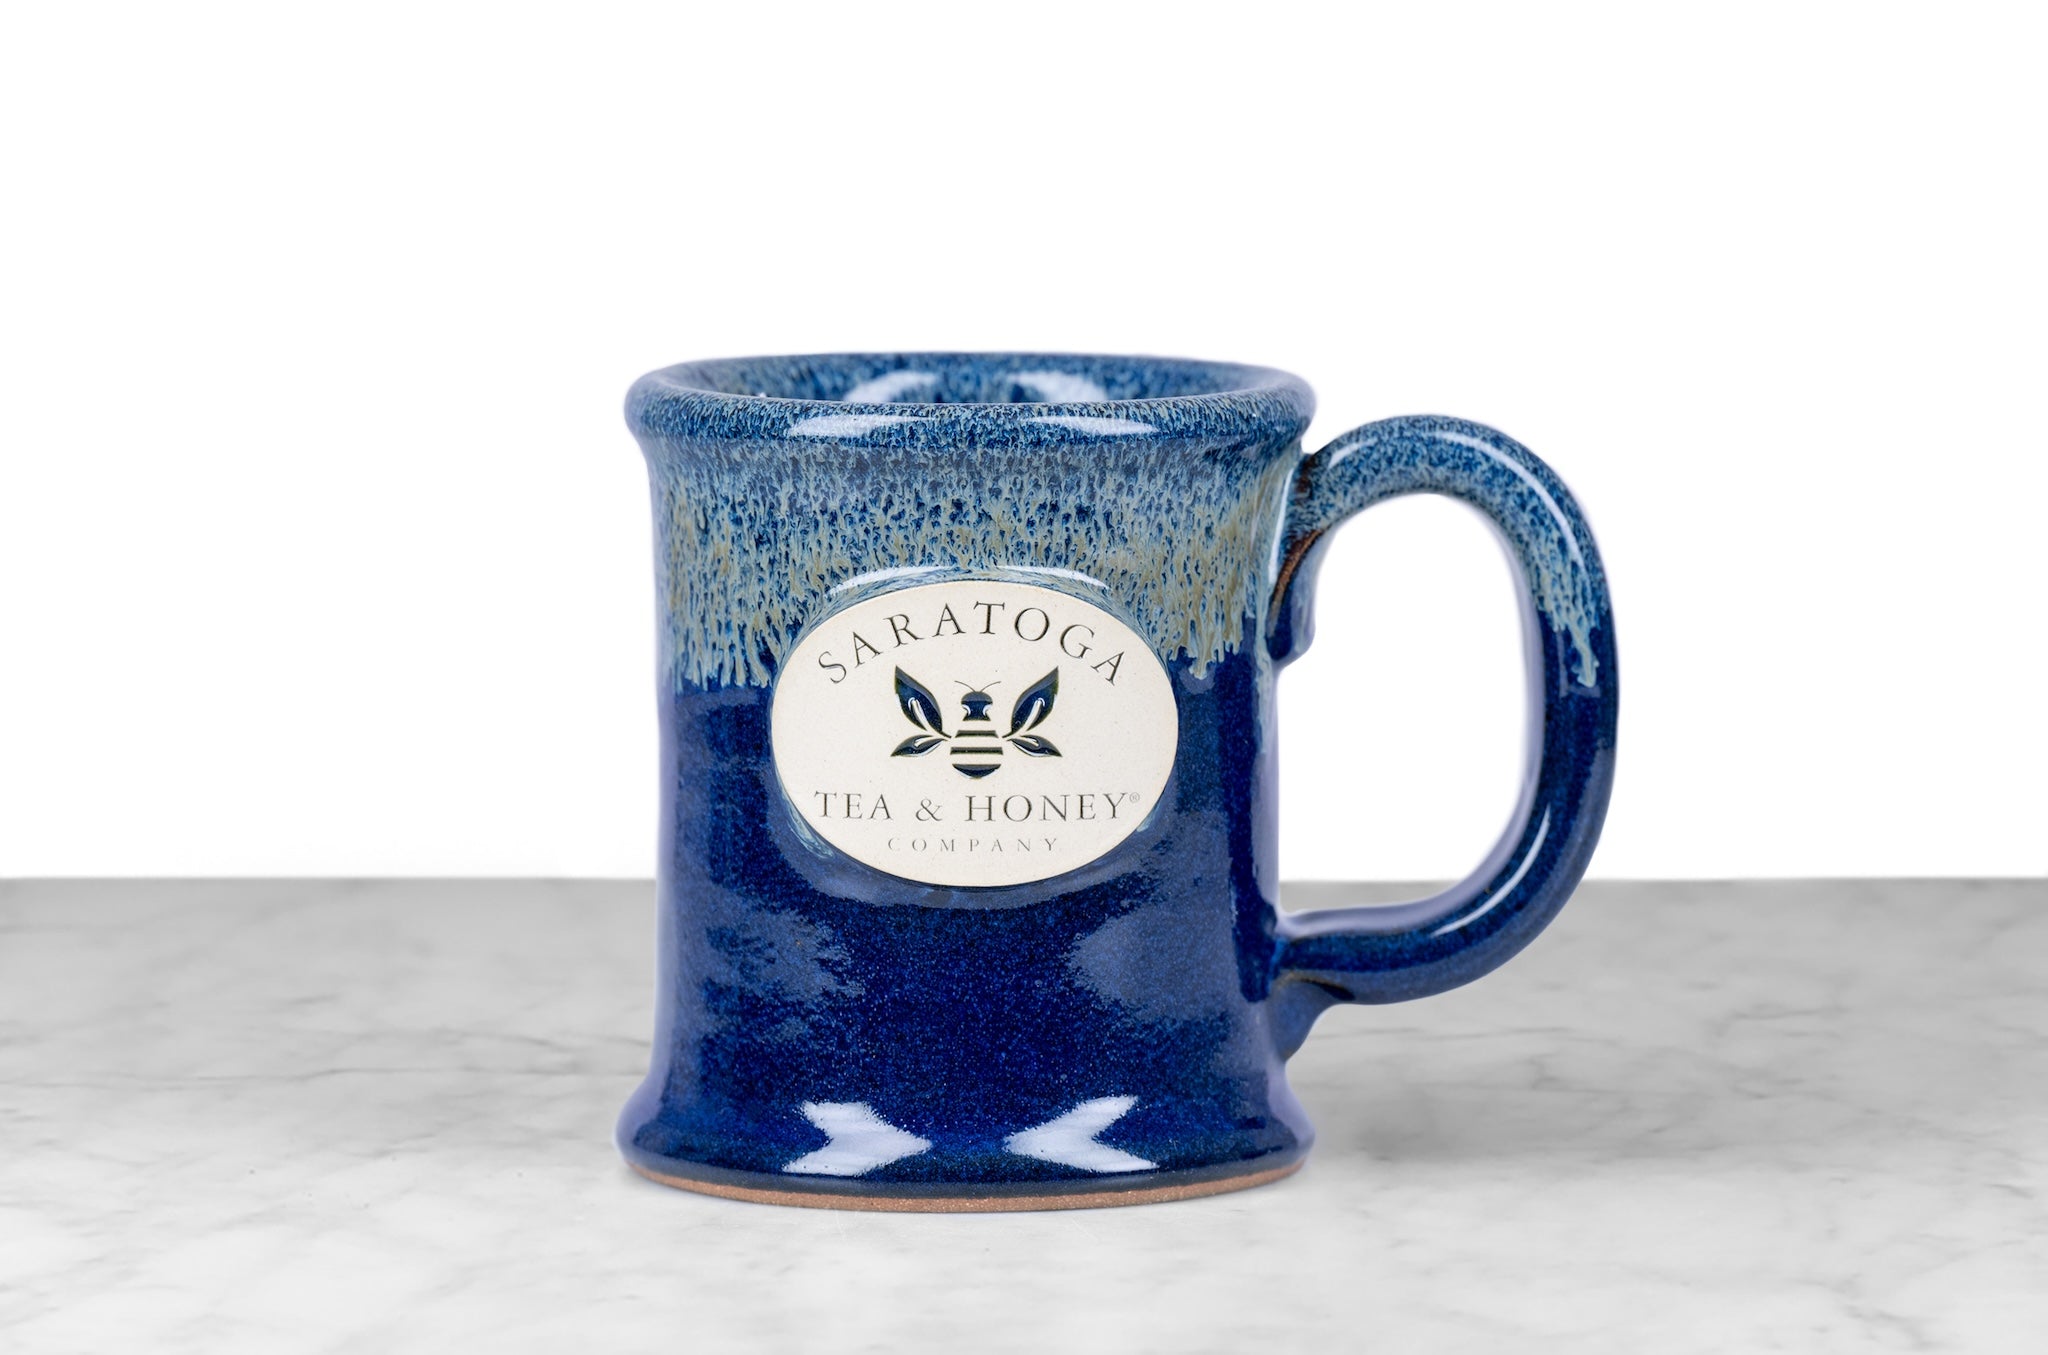 "Northern Lights" Ombre light to dark blue mug with saratoga tea and honey co. logo